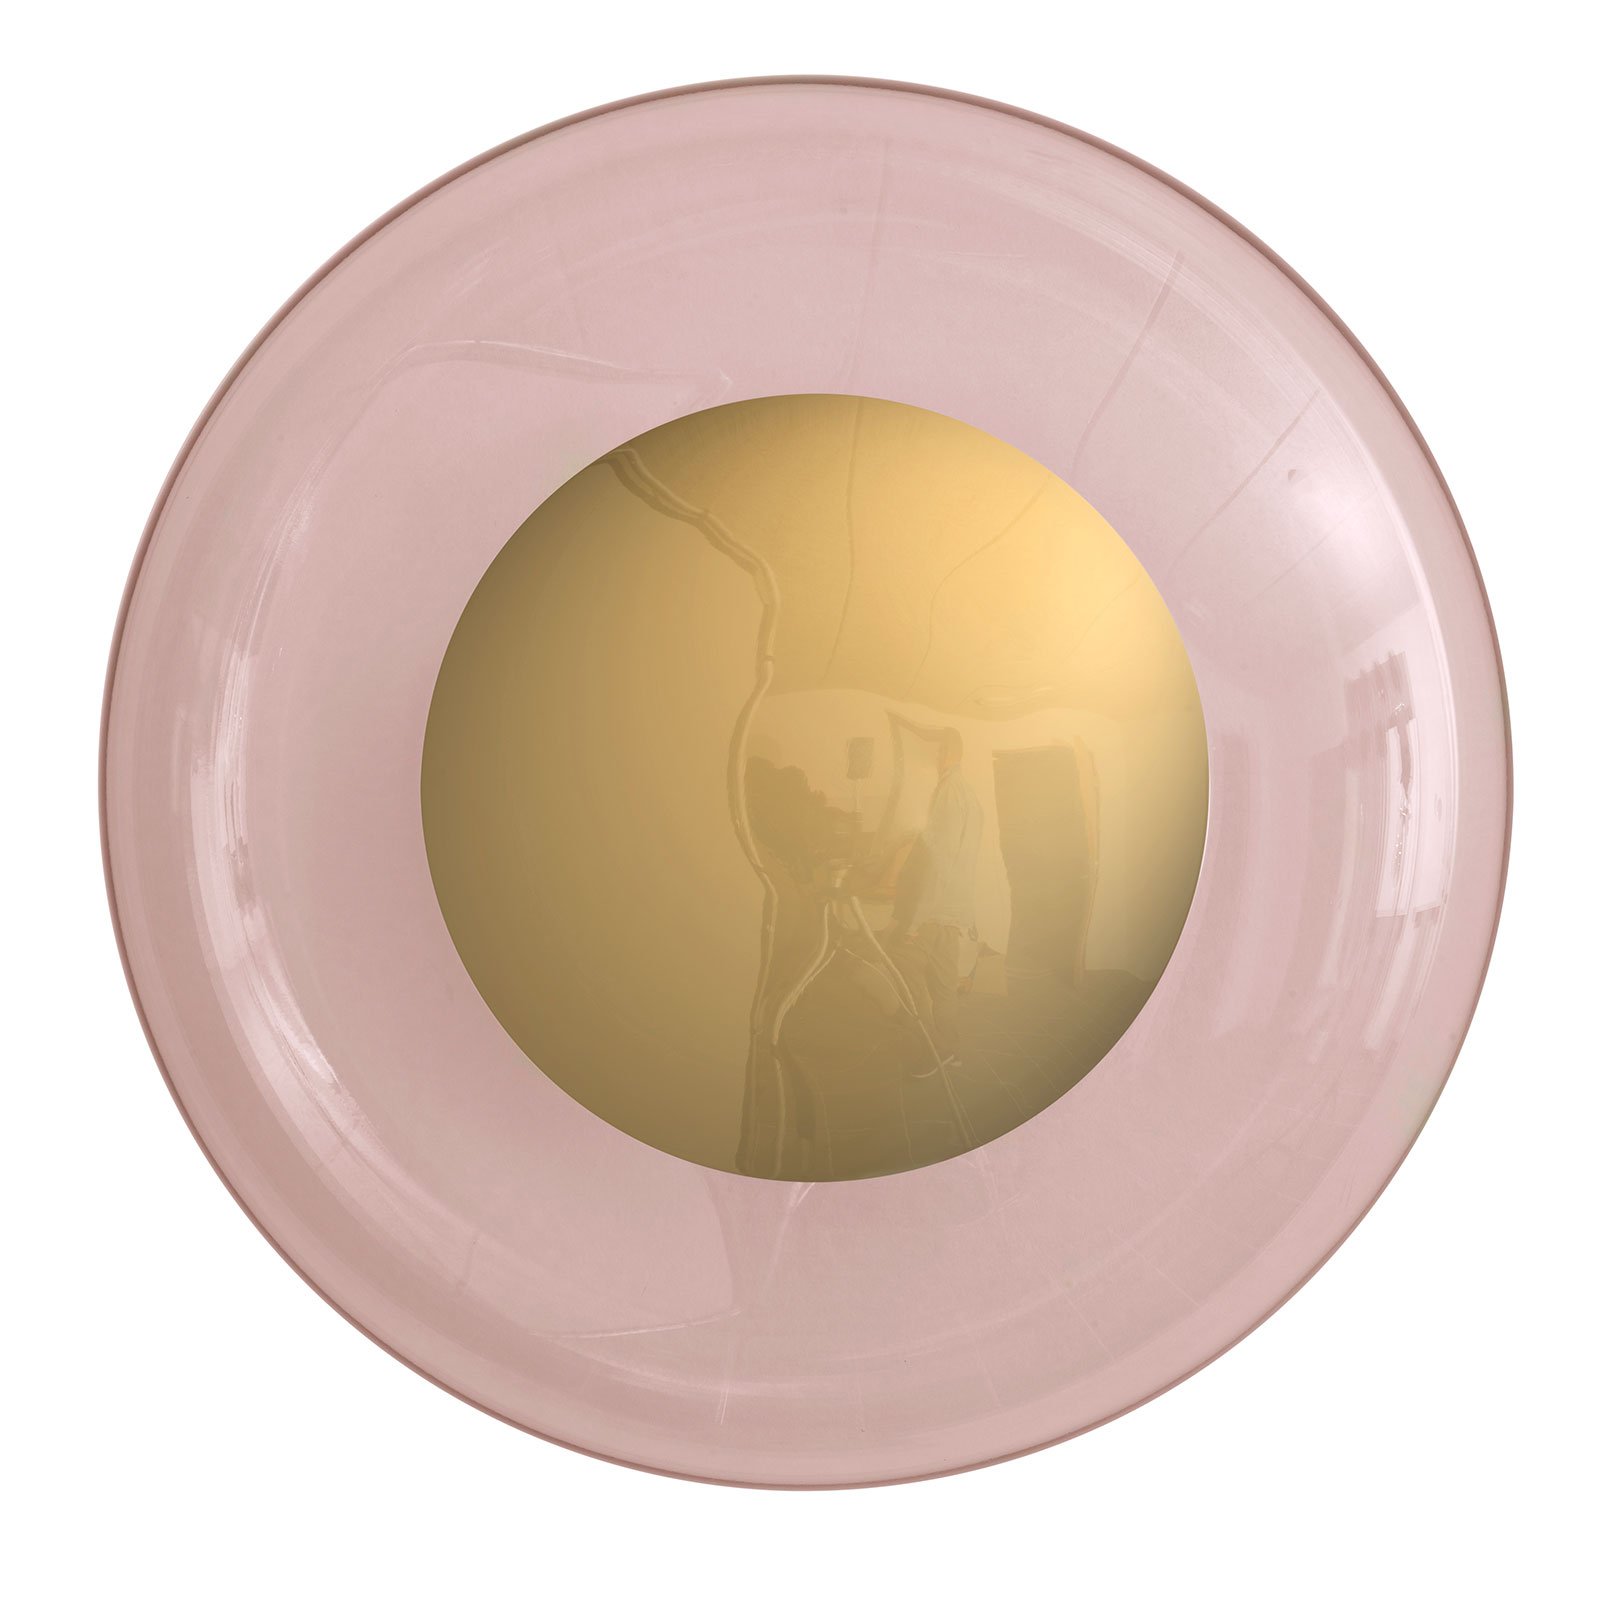 EBB & FLOW Horizon fitting goud/rosé-goud Ø 36 cm